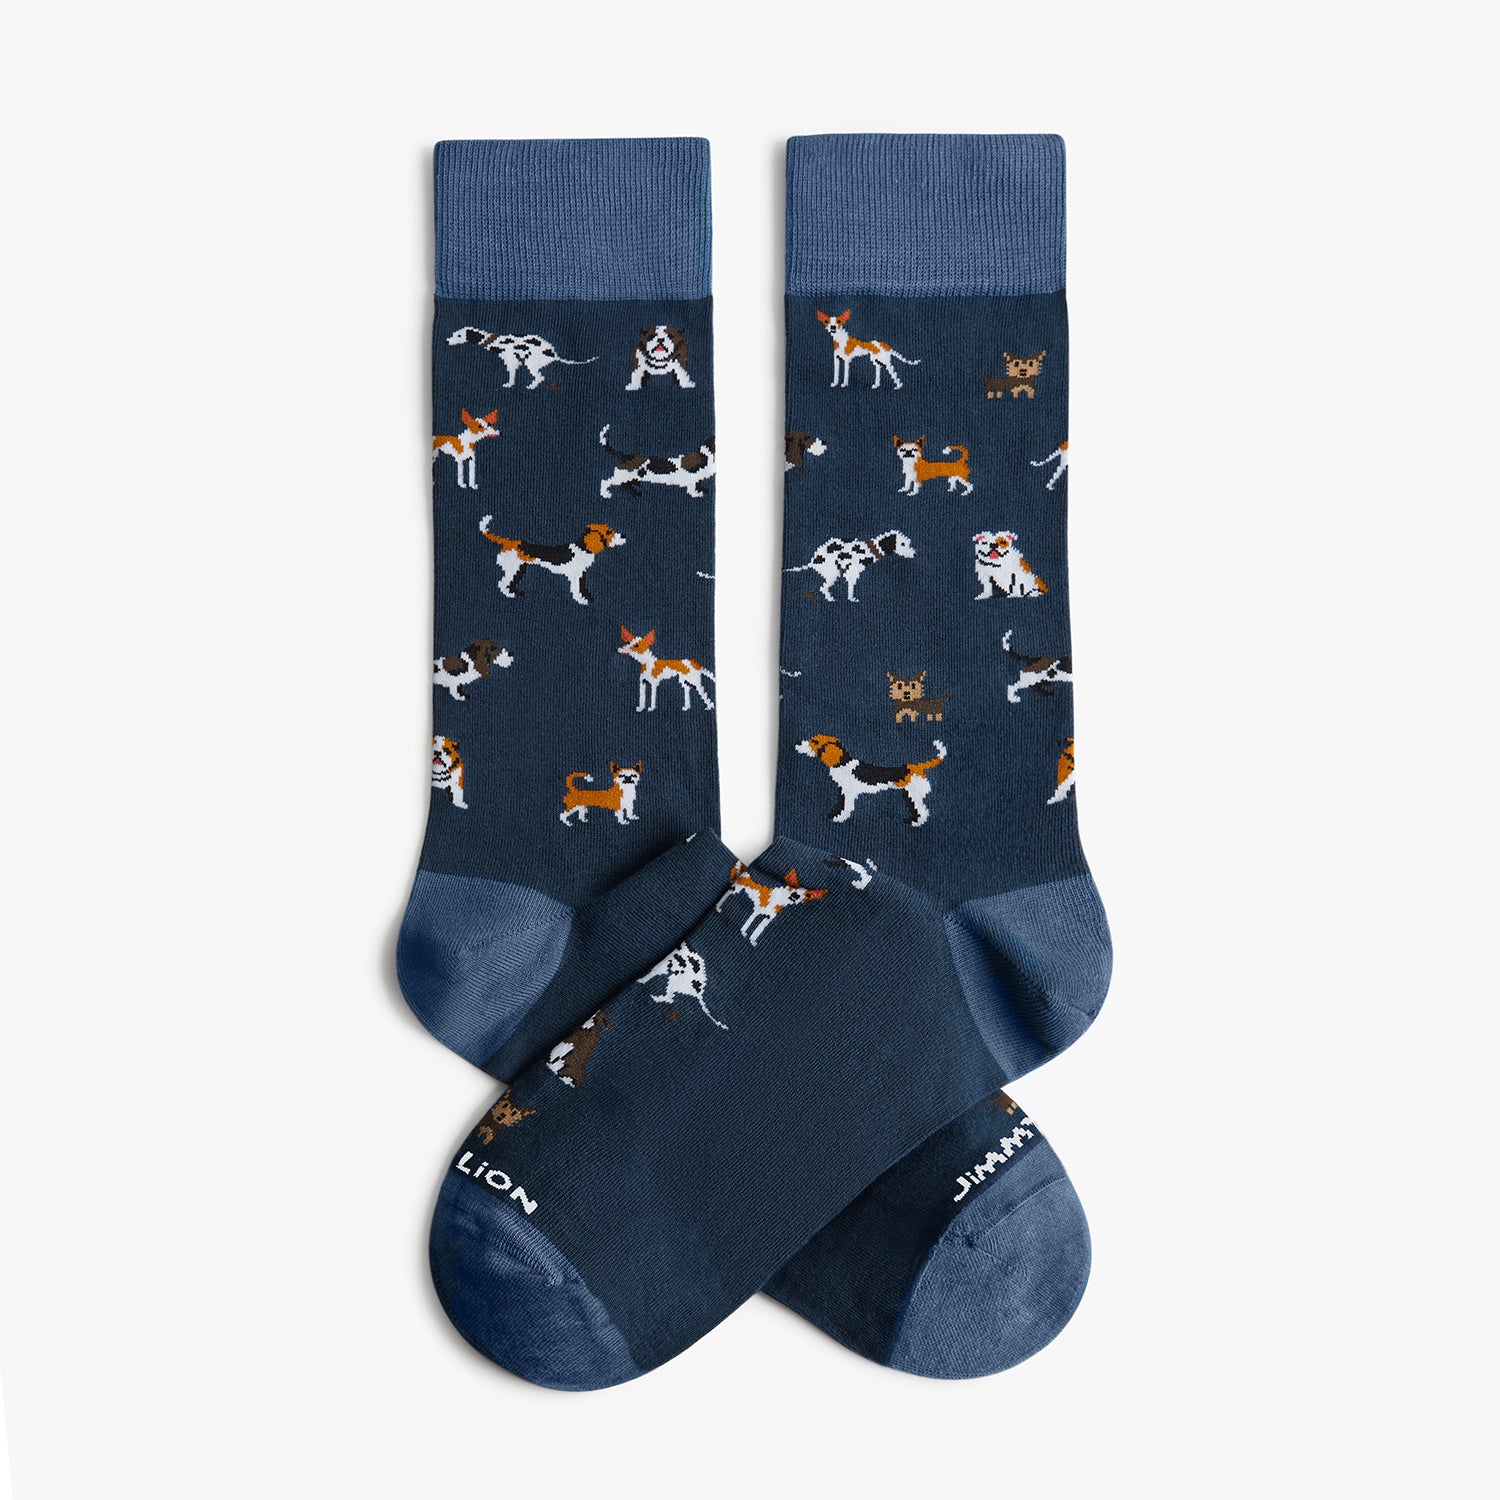 Cool & Unique Socks Online for Men, Women & Kids